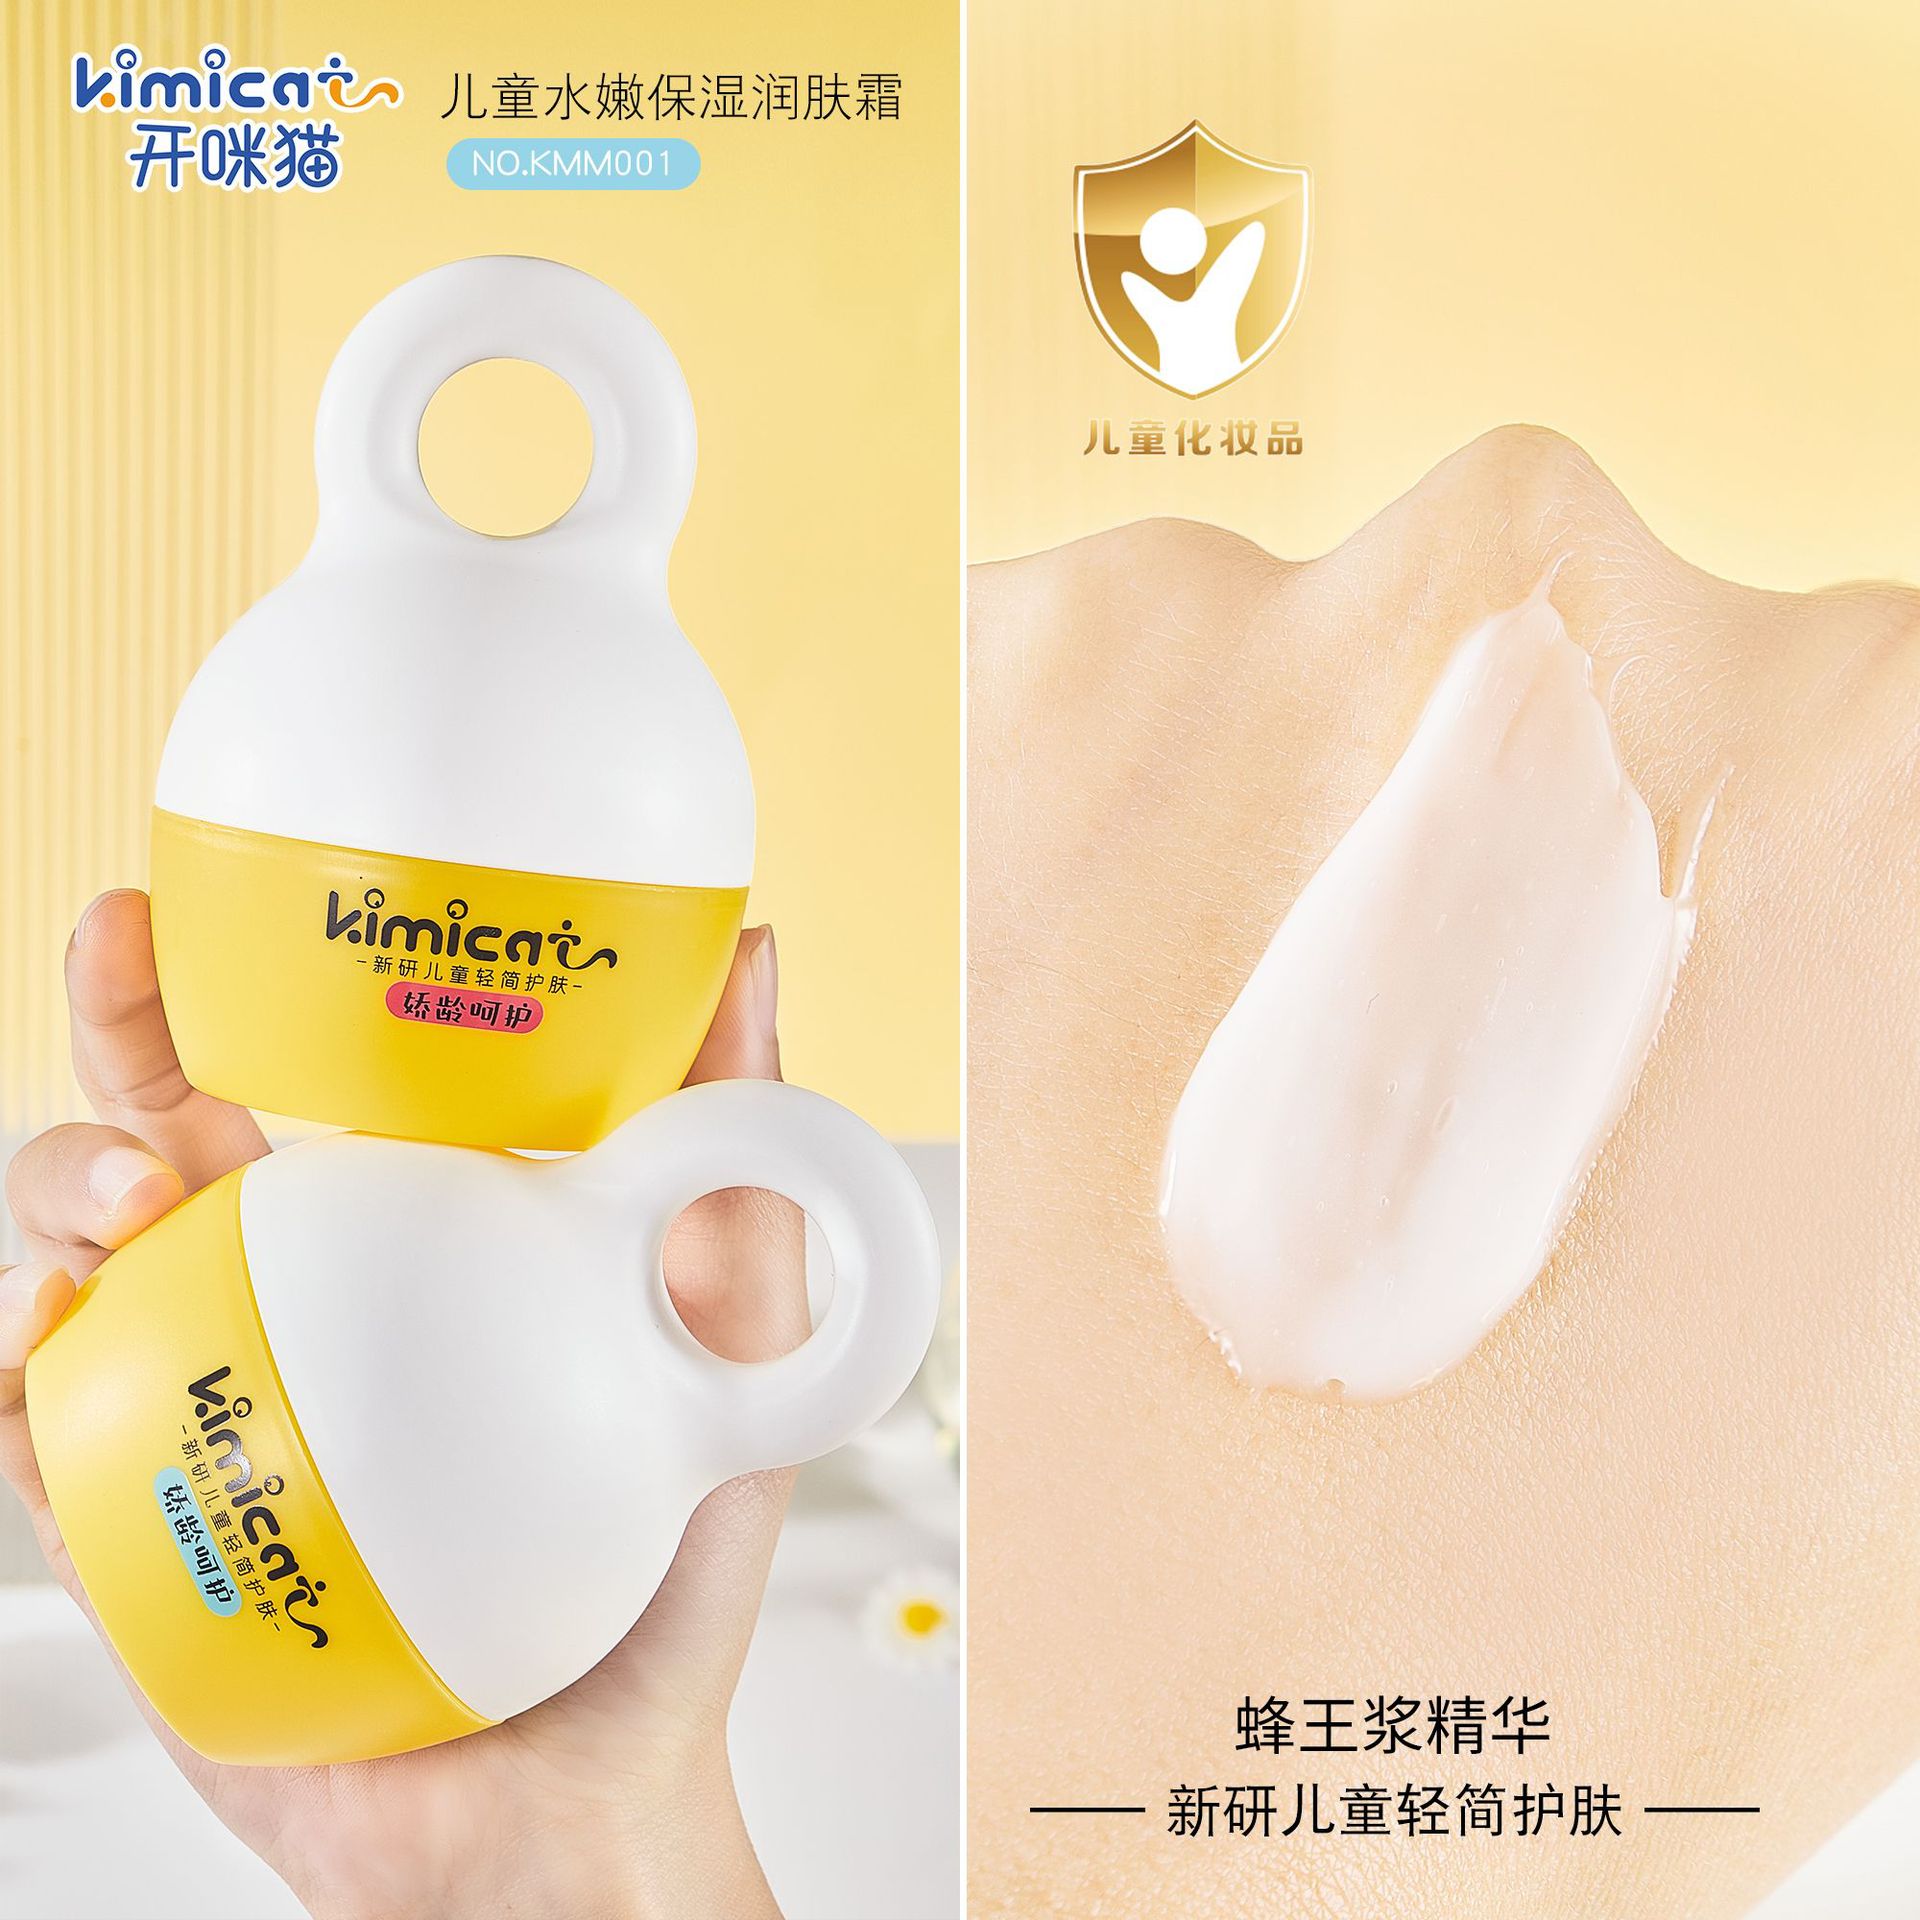 Children's Cream Wholesale Authentic Baby's Facial Cream Nourishing, Hydrating and Moisturizing Baby Face Cream Student Run Skin Cream